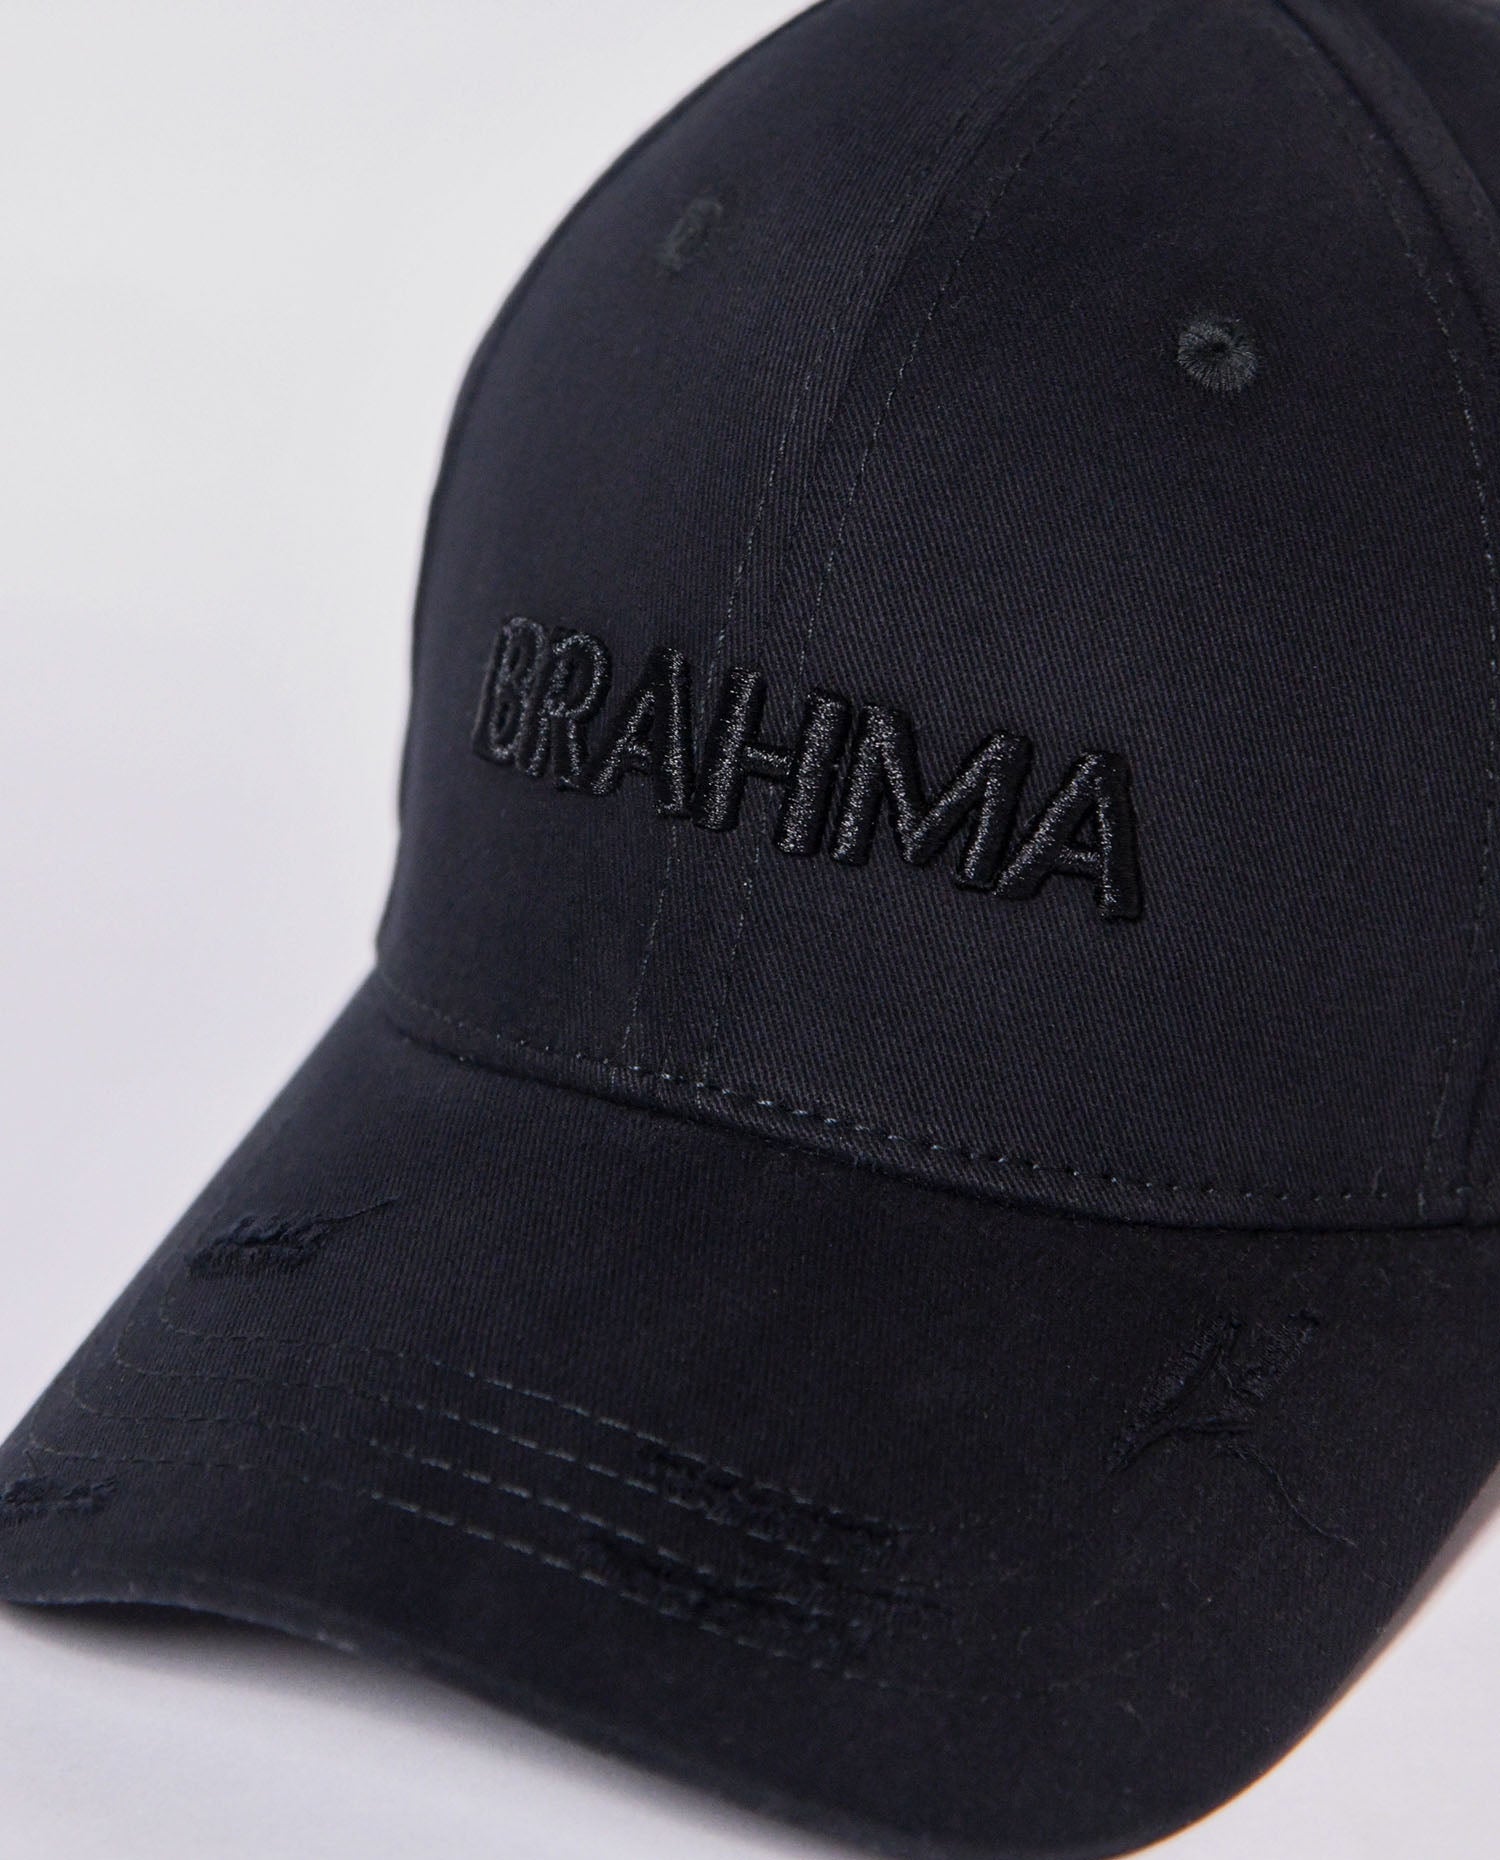 Brahma - Black Baseball Cap